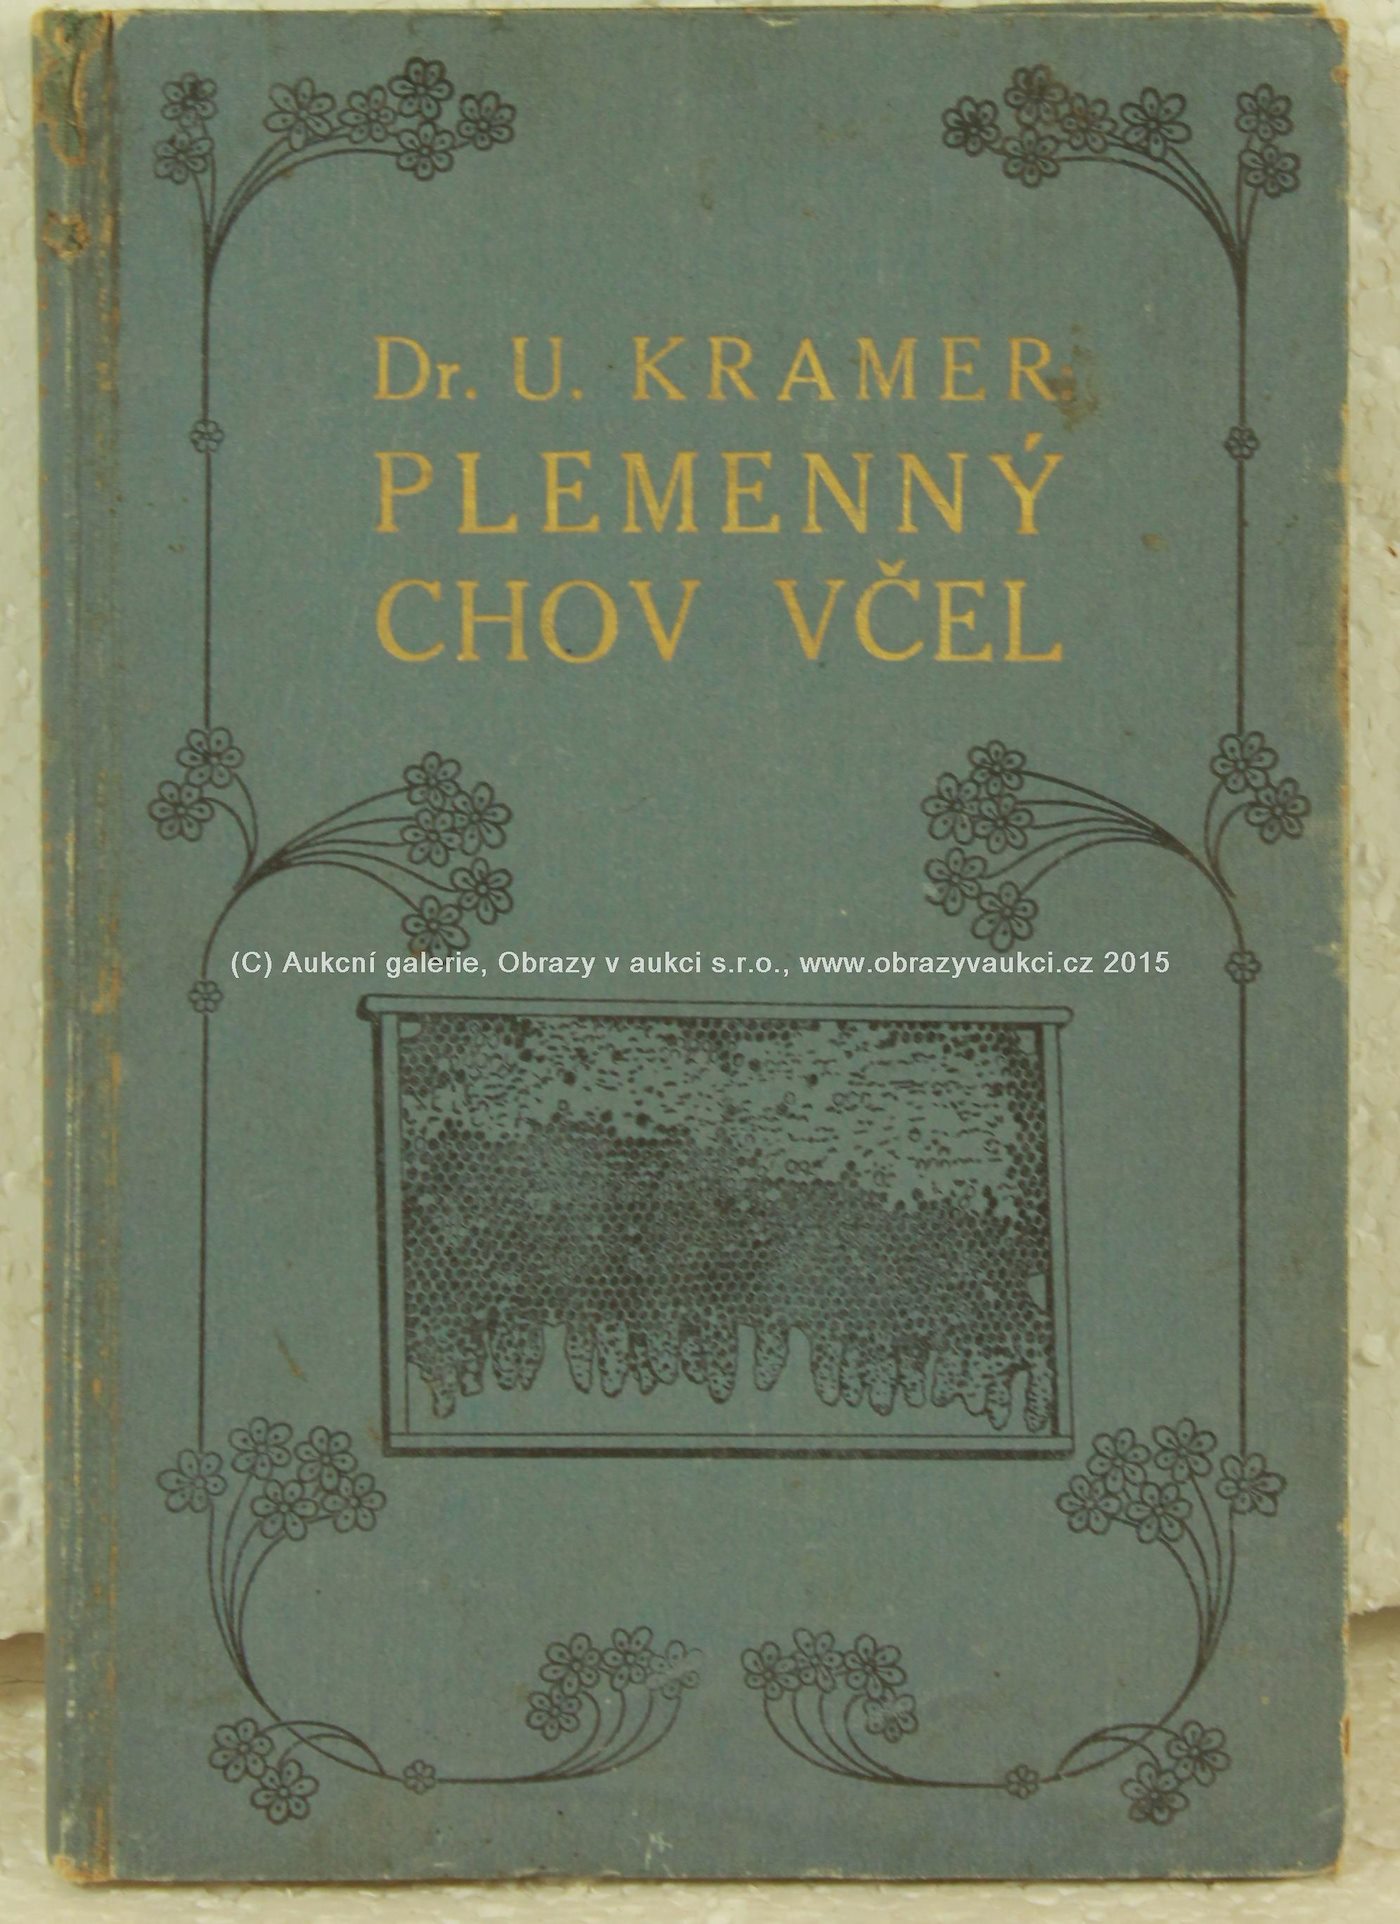 U.Kramer - Plemenný chov švýcarských včelařů